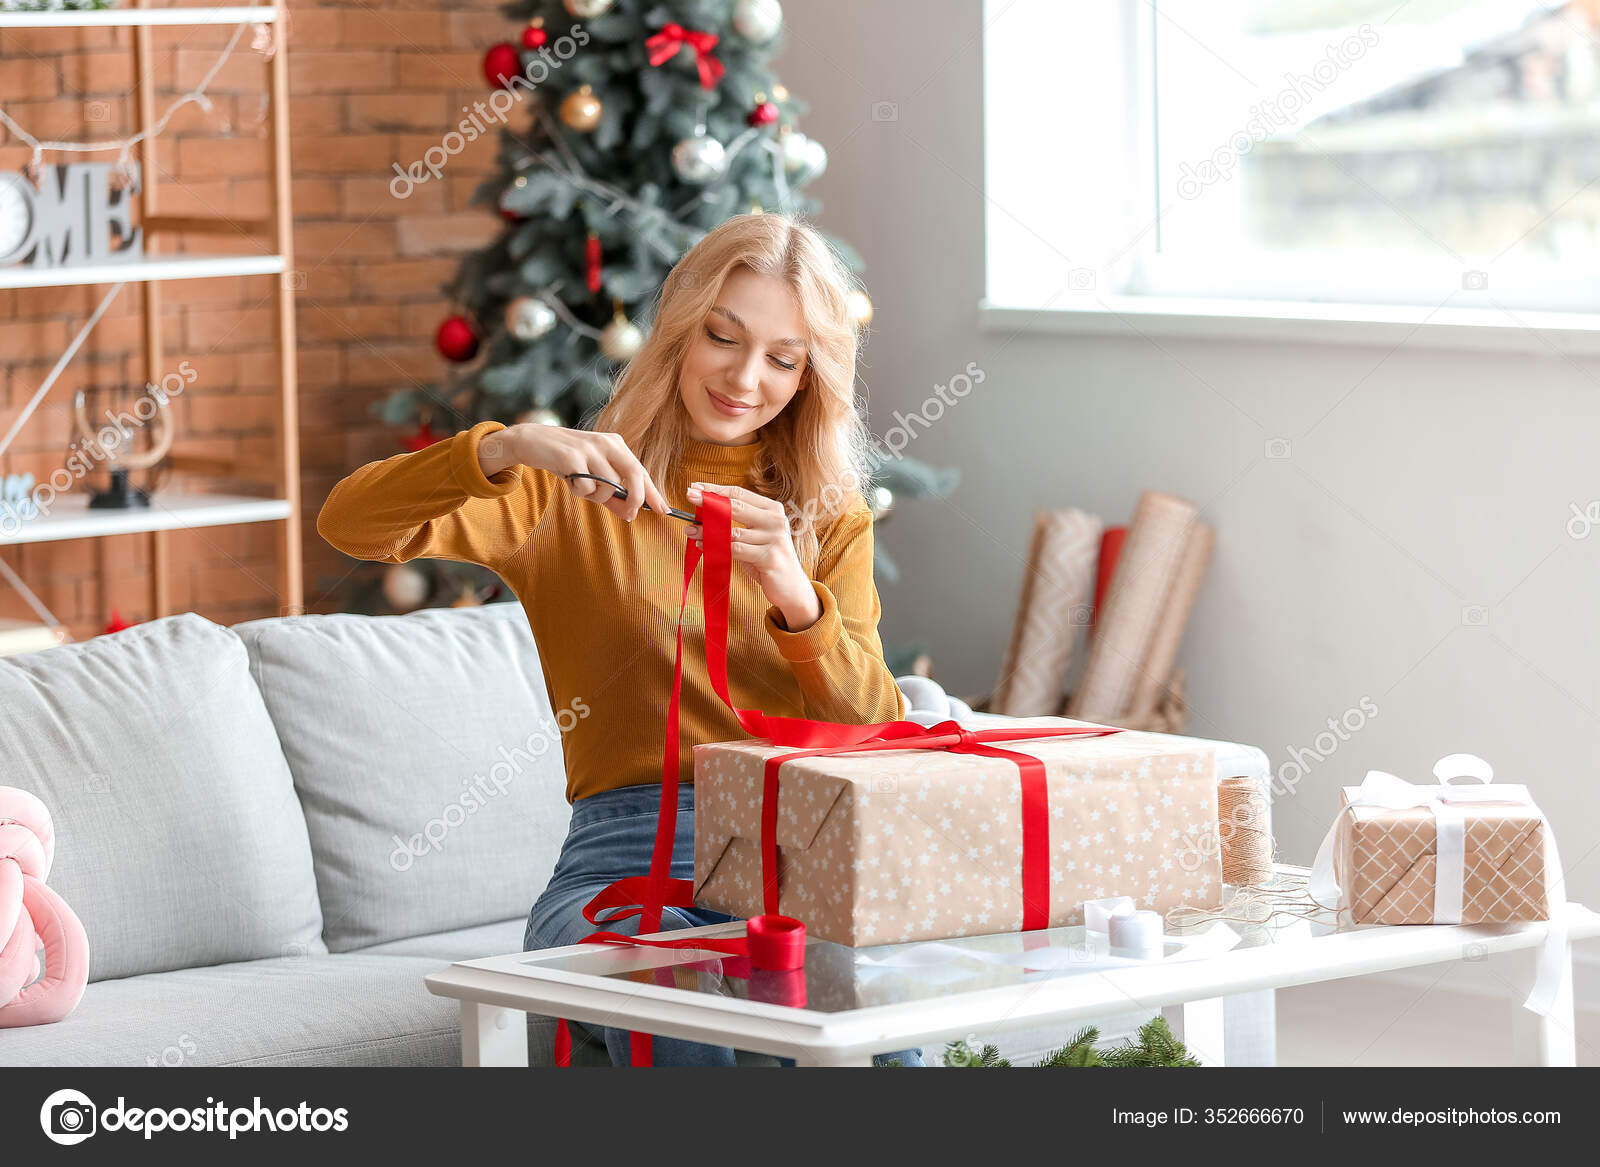 https://st3.depositphotos.com/10614052/35266/i/1600/depositphotos_352666670-stock-photo-beautiful-young-woman-wrapping-christmas.jpg